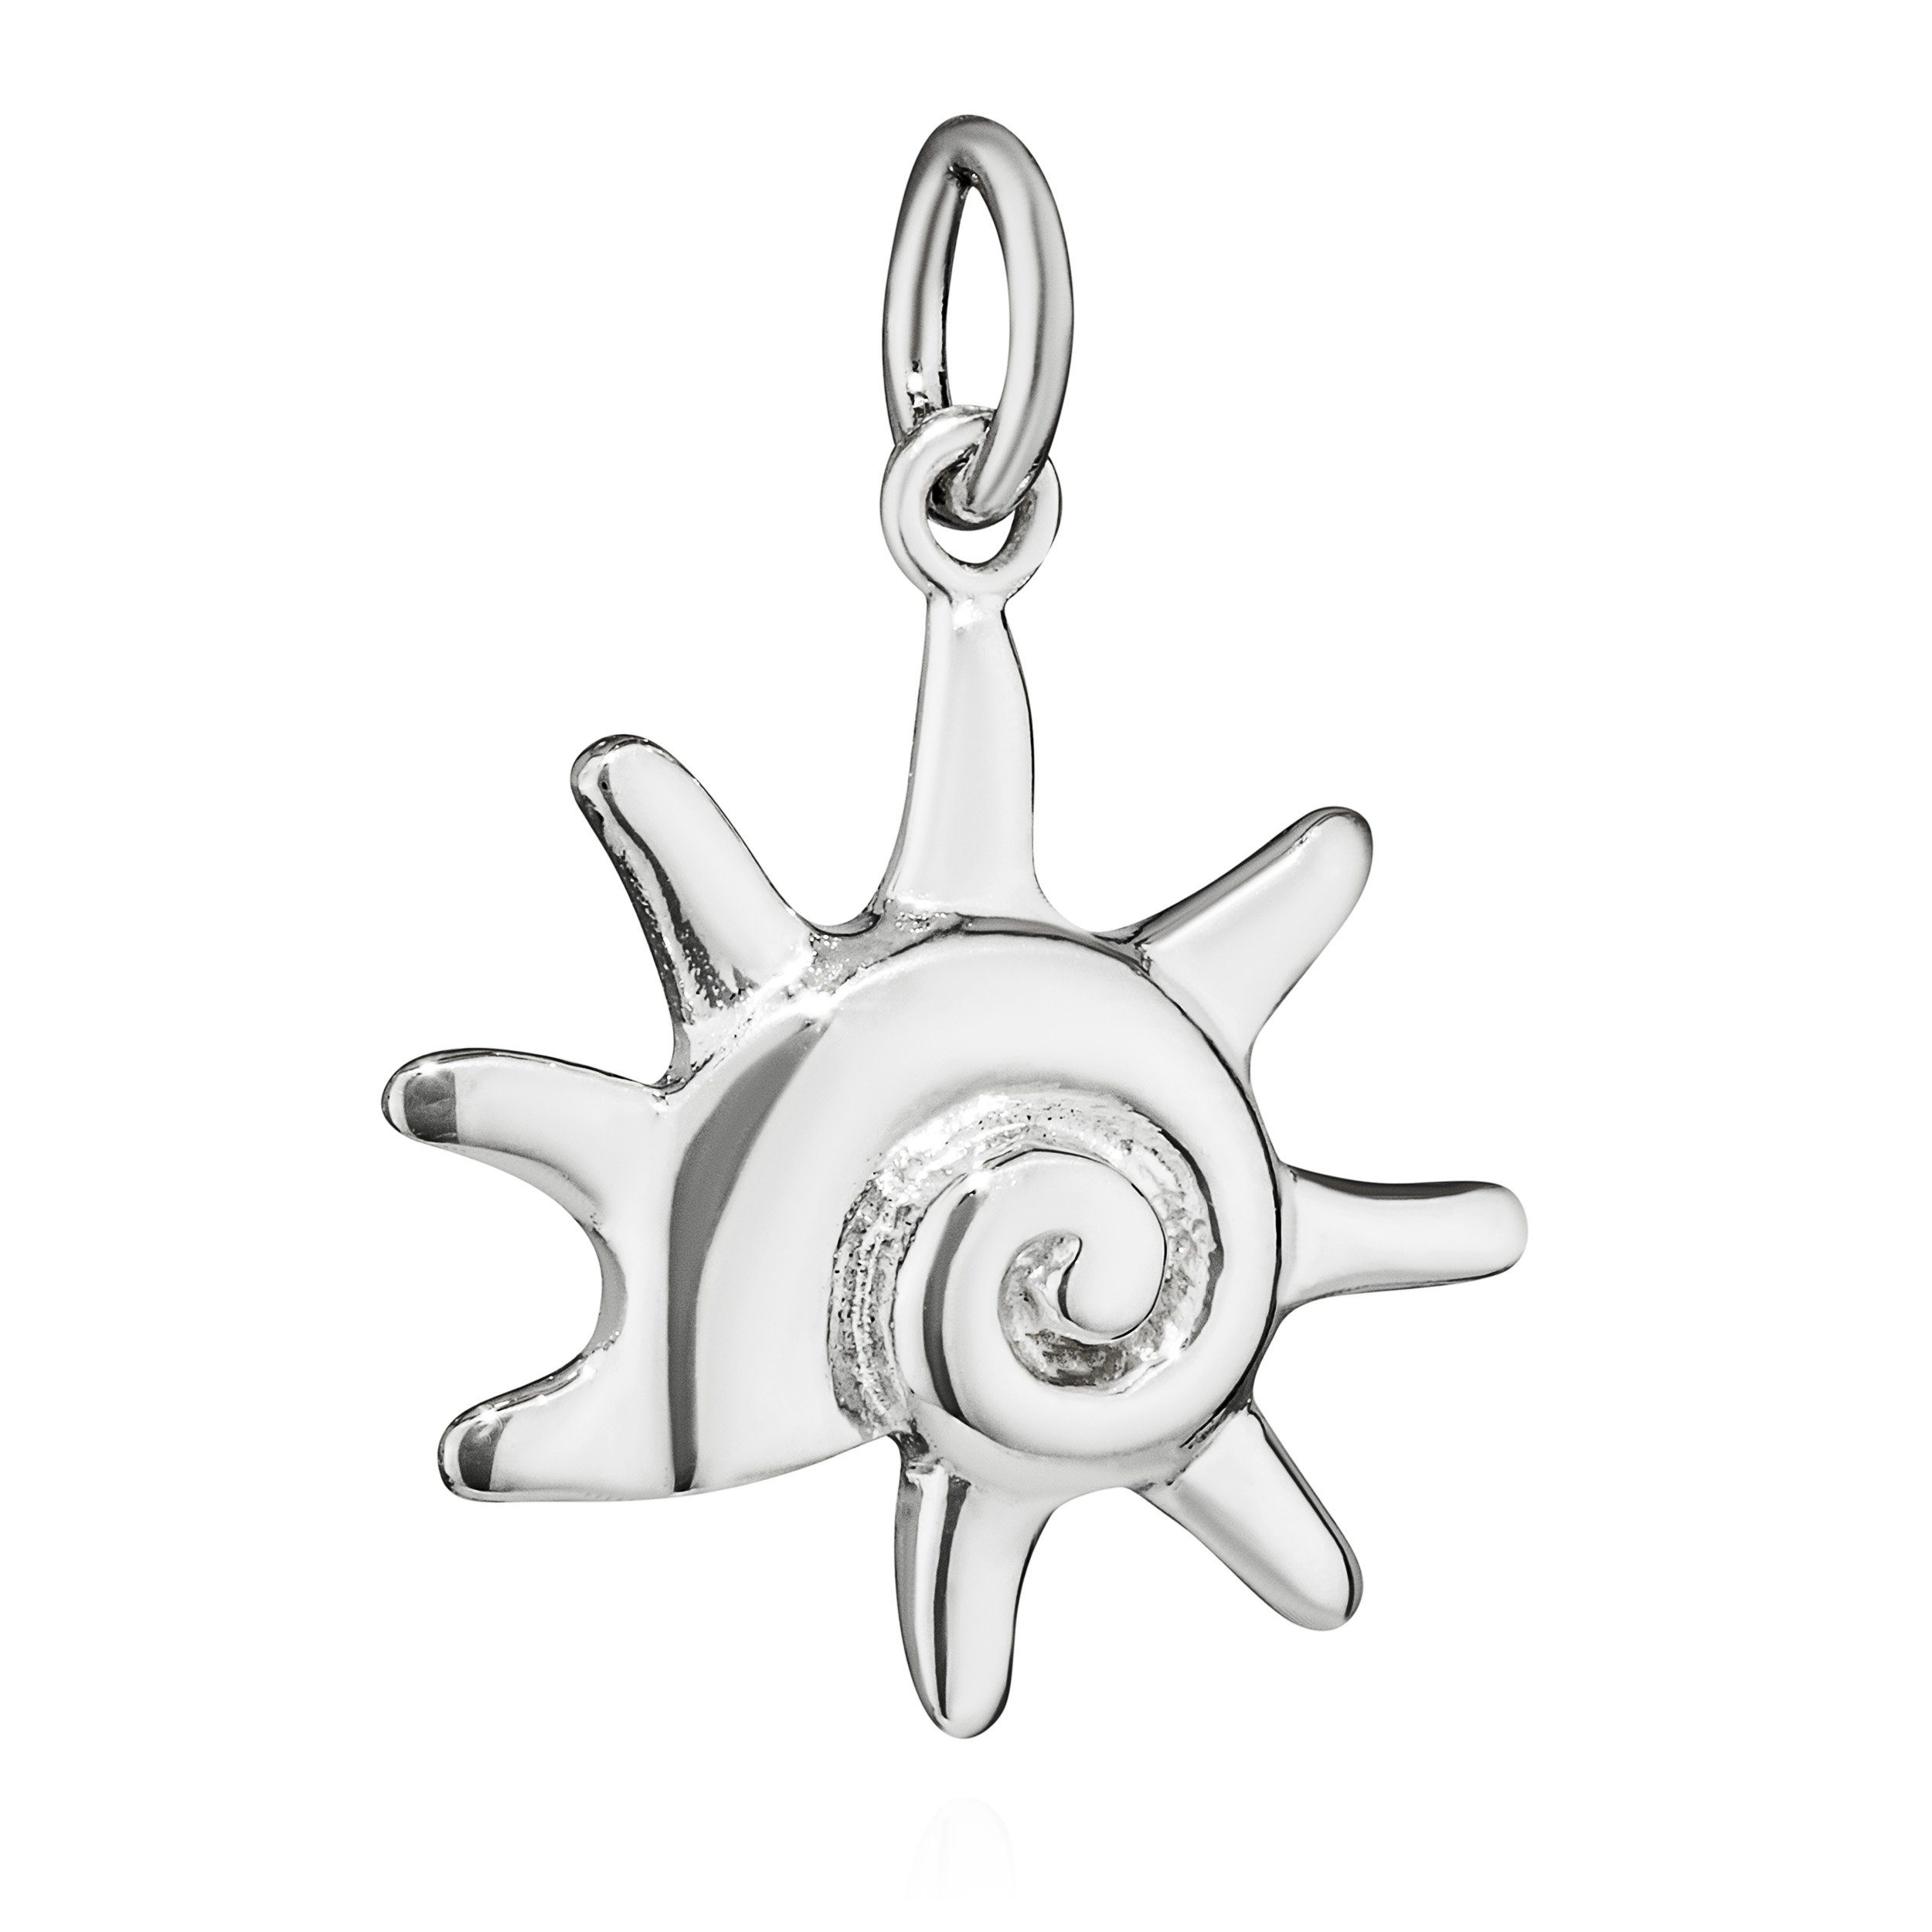 NKlaus Kettenanhänger 2x2cm Kettenanhänger groß Sonnenspirale Kettencharm-Anhänge Silber 925